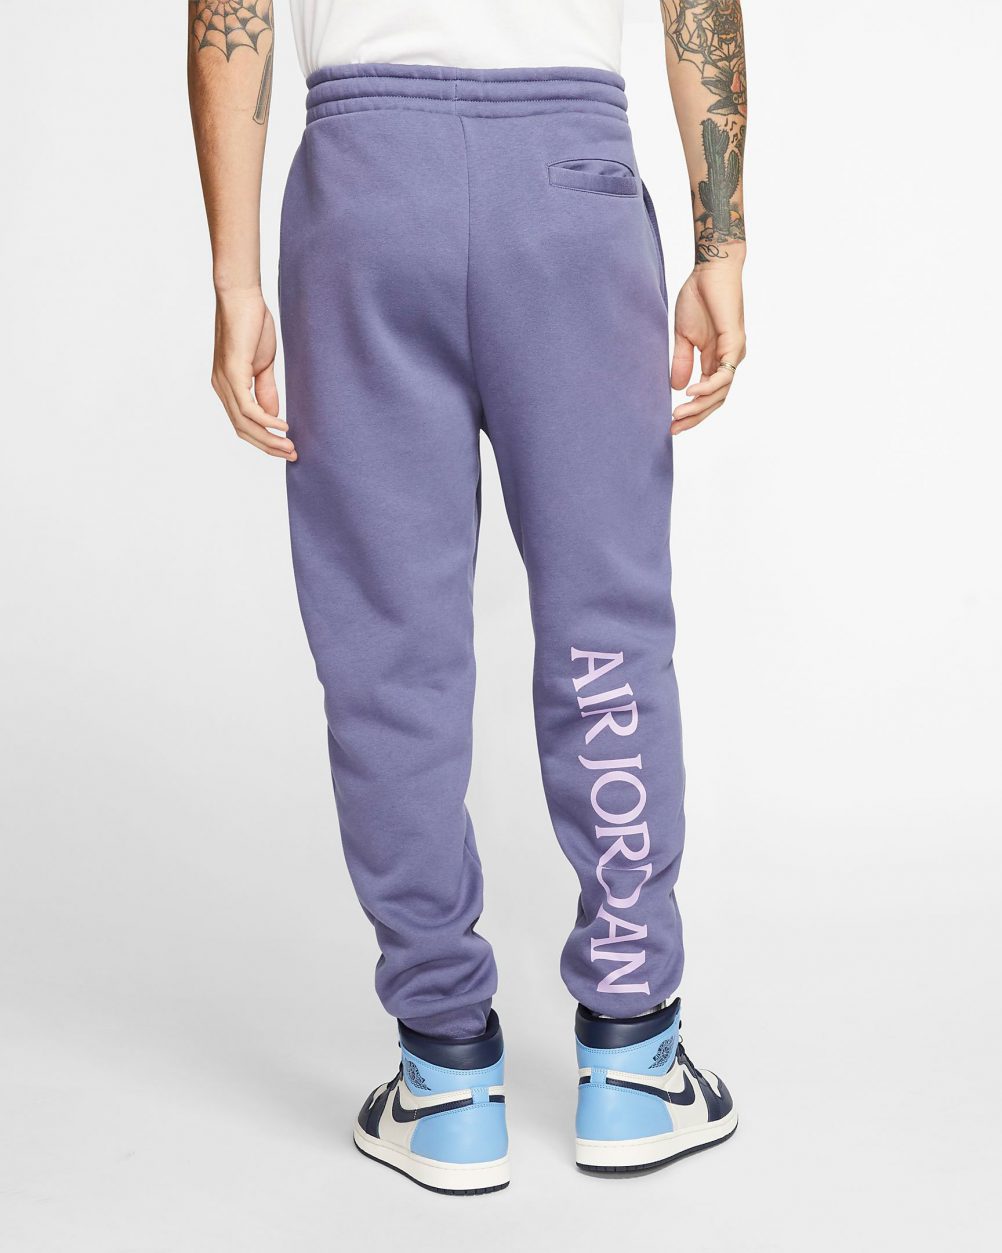 Air Jordan 4 Metallic Purple Clothing Match | SneakerFits.com